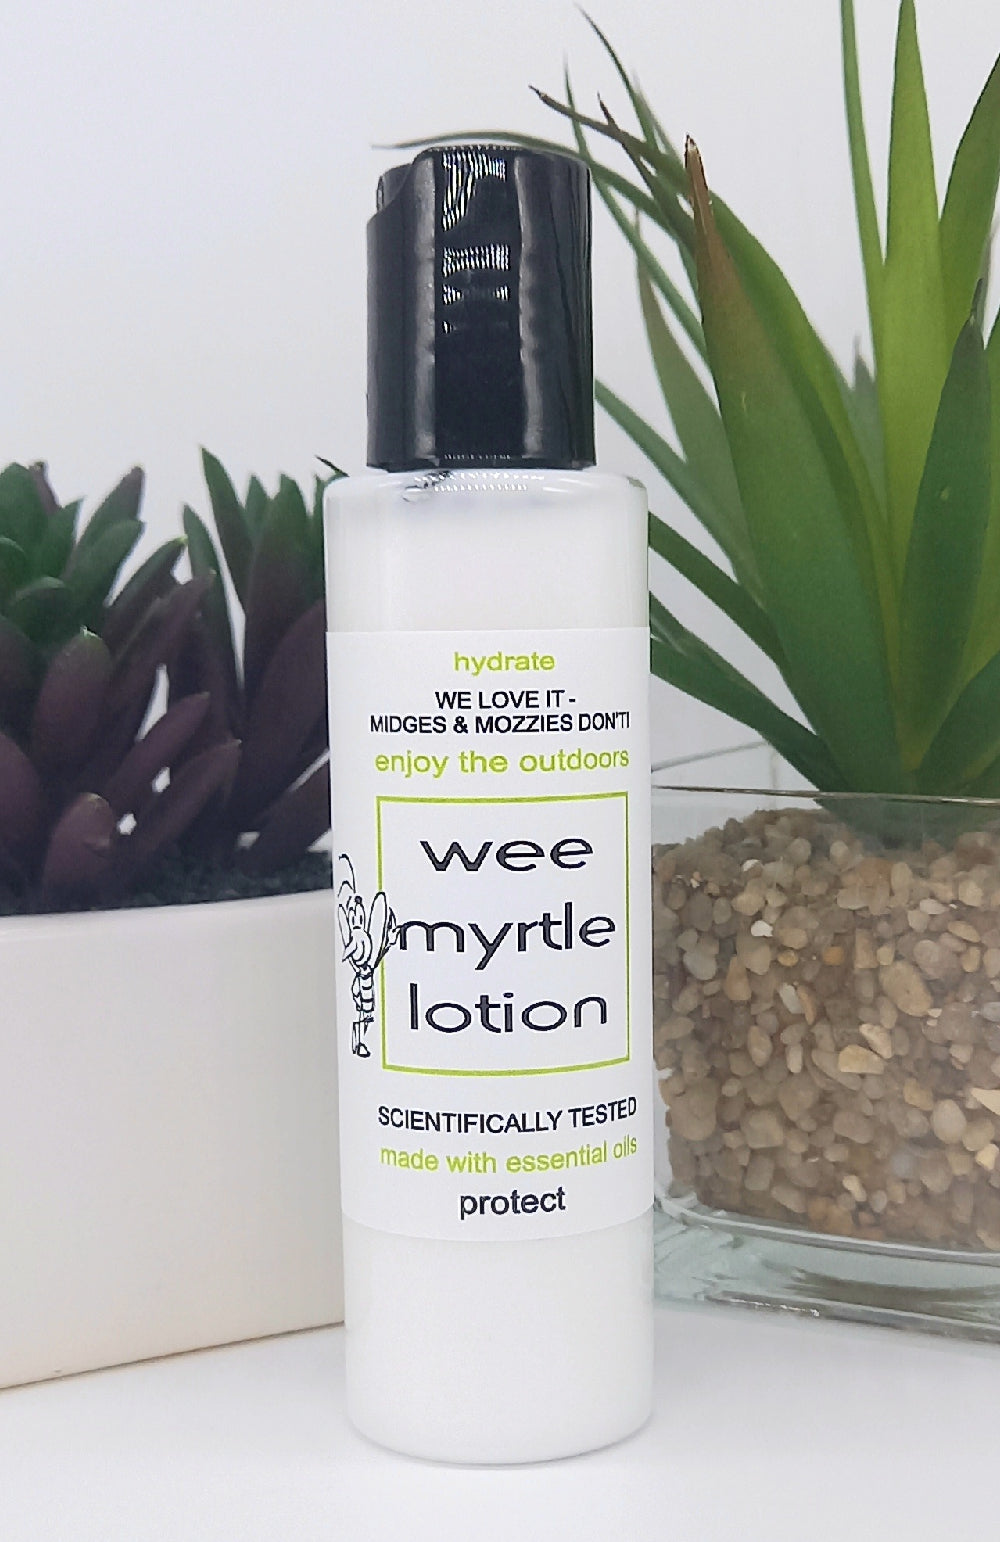 Wee Myrtle Body Lotion - Natural Skin Care we love, midges don't!